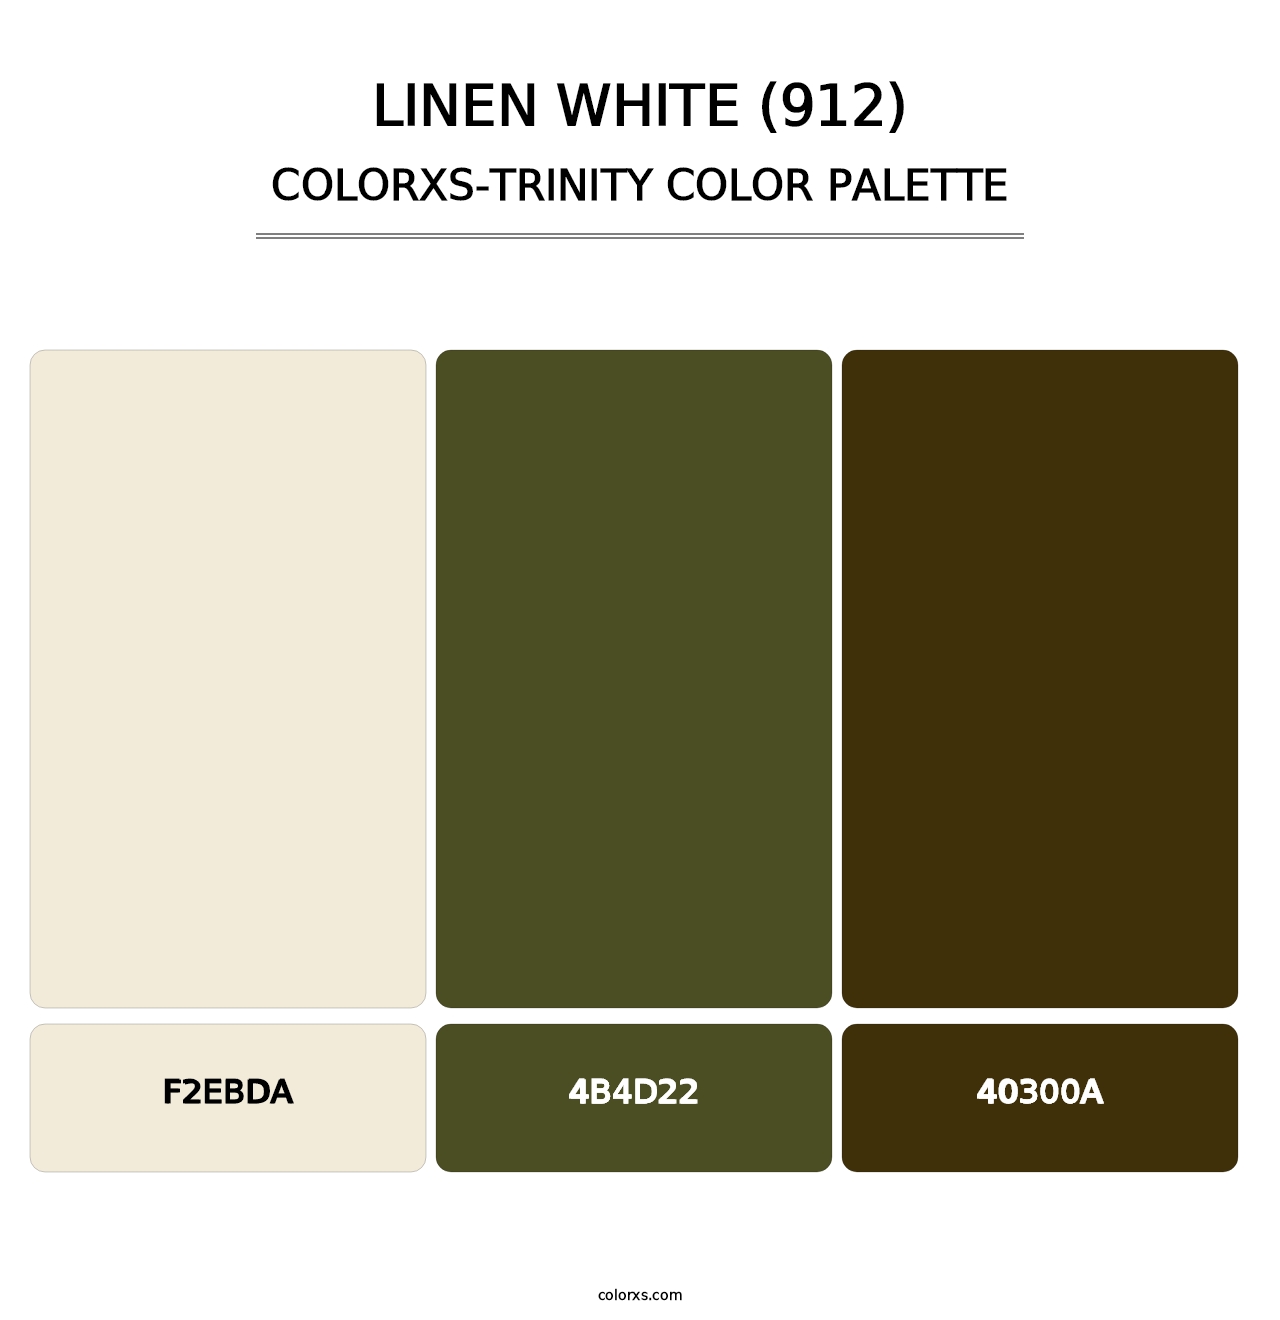 Linen White (912) - Colorxs Trinity Palette